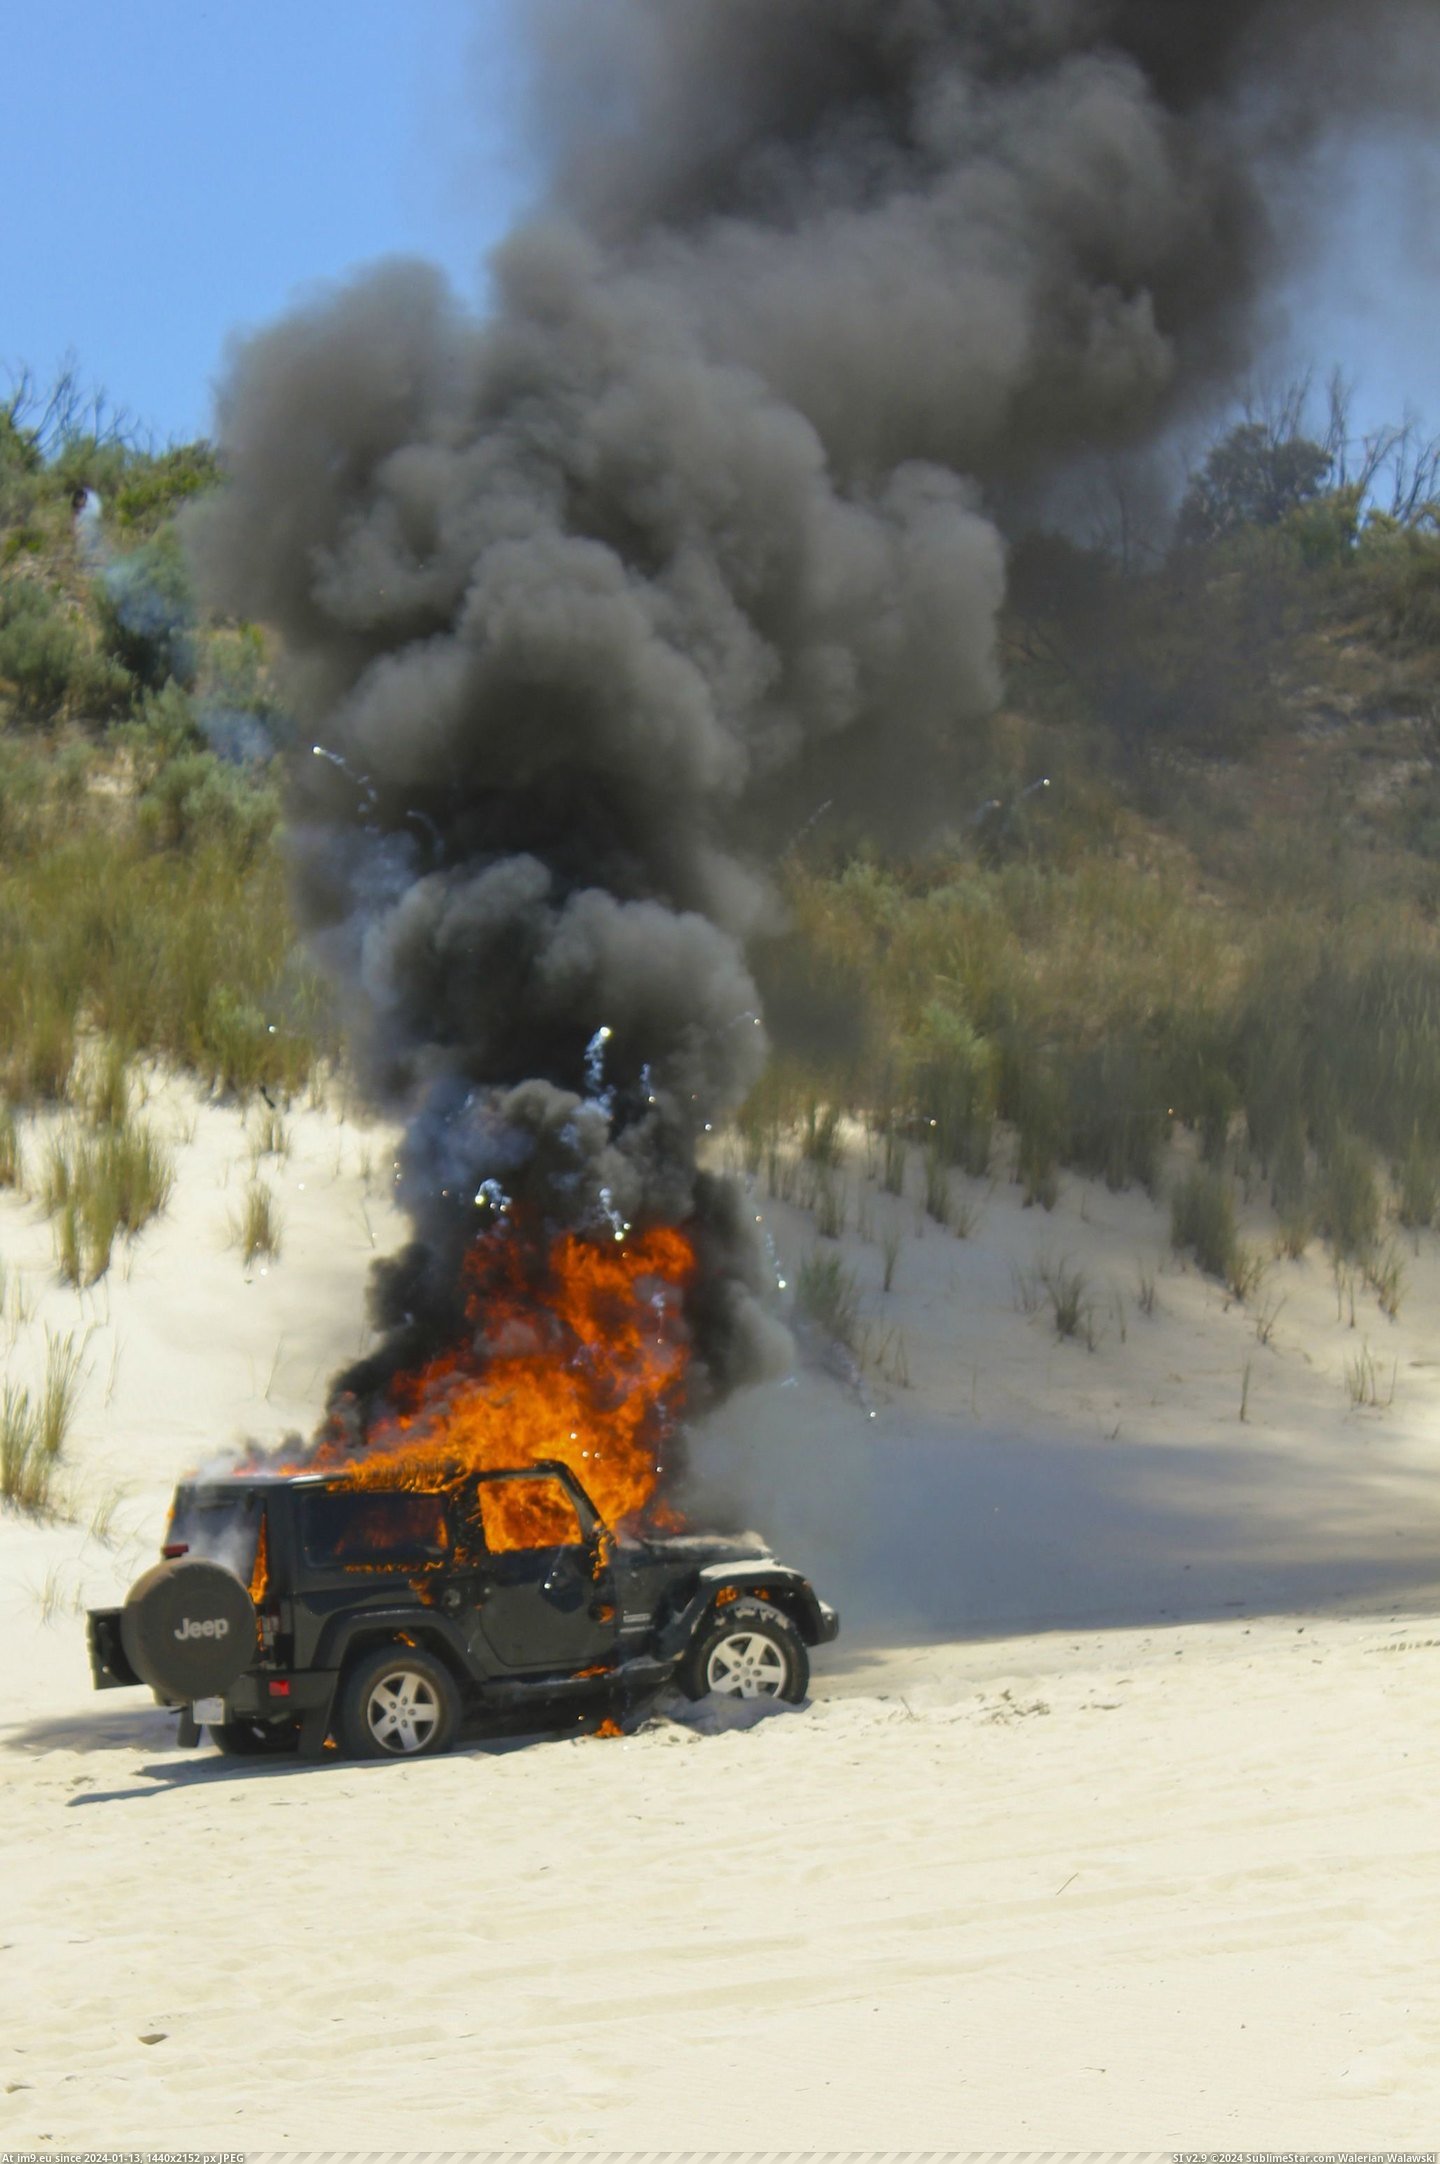 #Interested #Wrangler #Explodes #Jeep [Pics] Wrangler explodes, Jeep not interested 4 Pic. (Изображение из альбом My r/PICS favs))